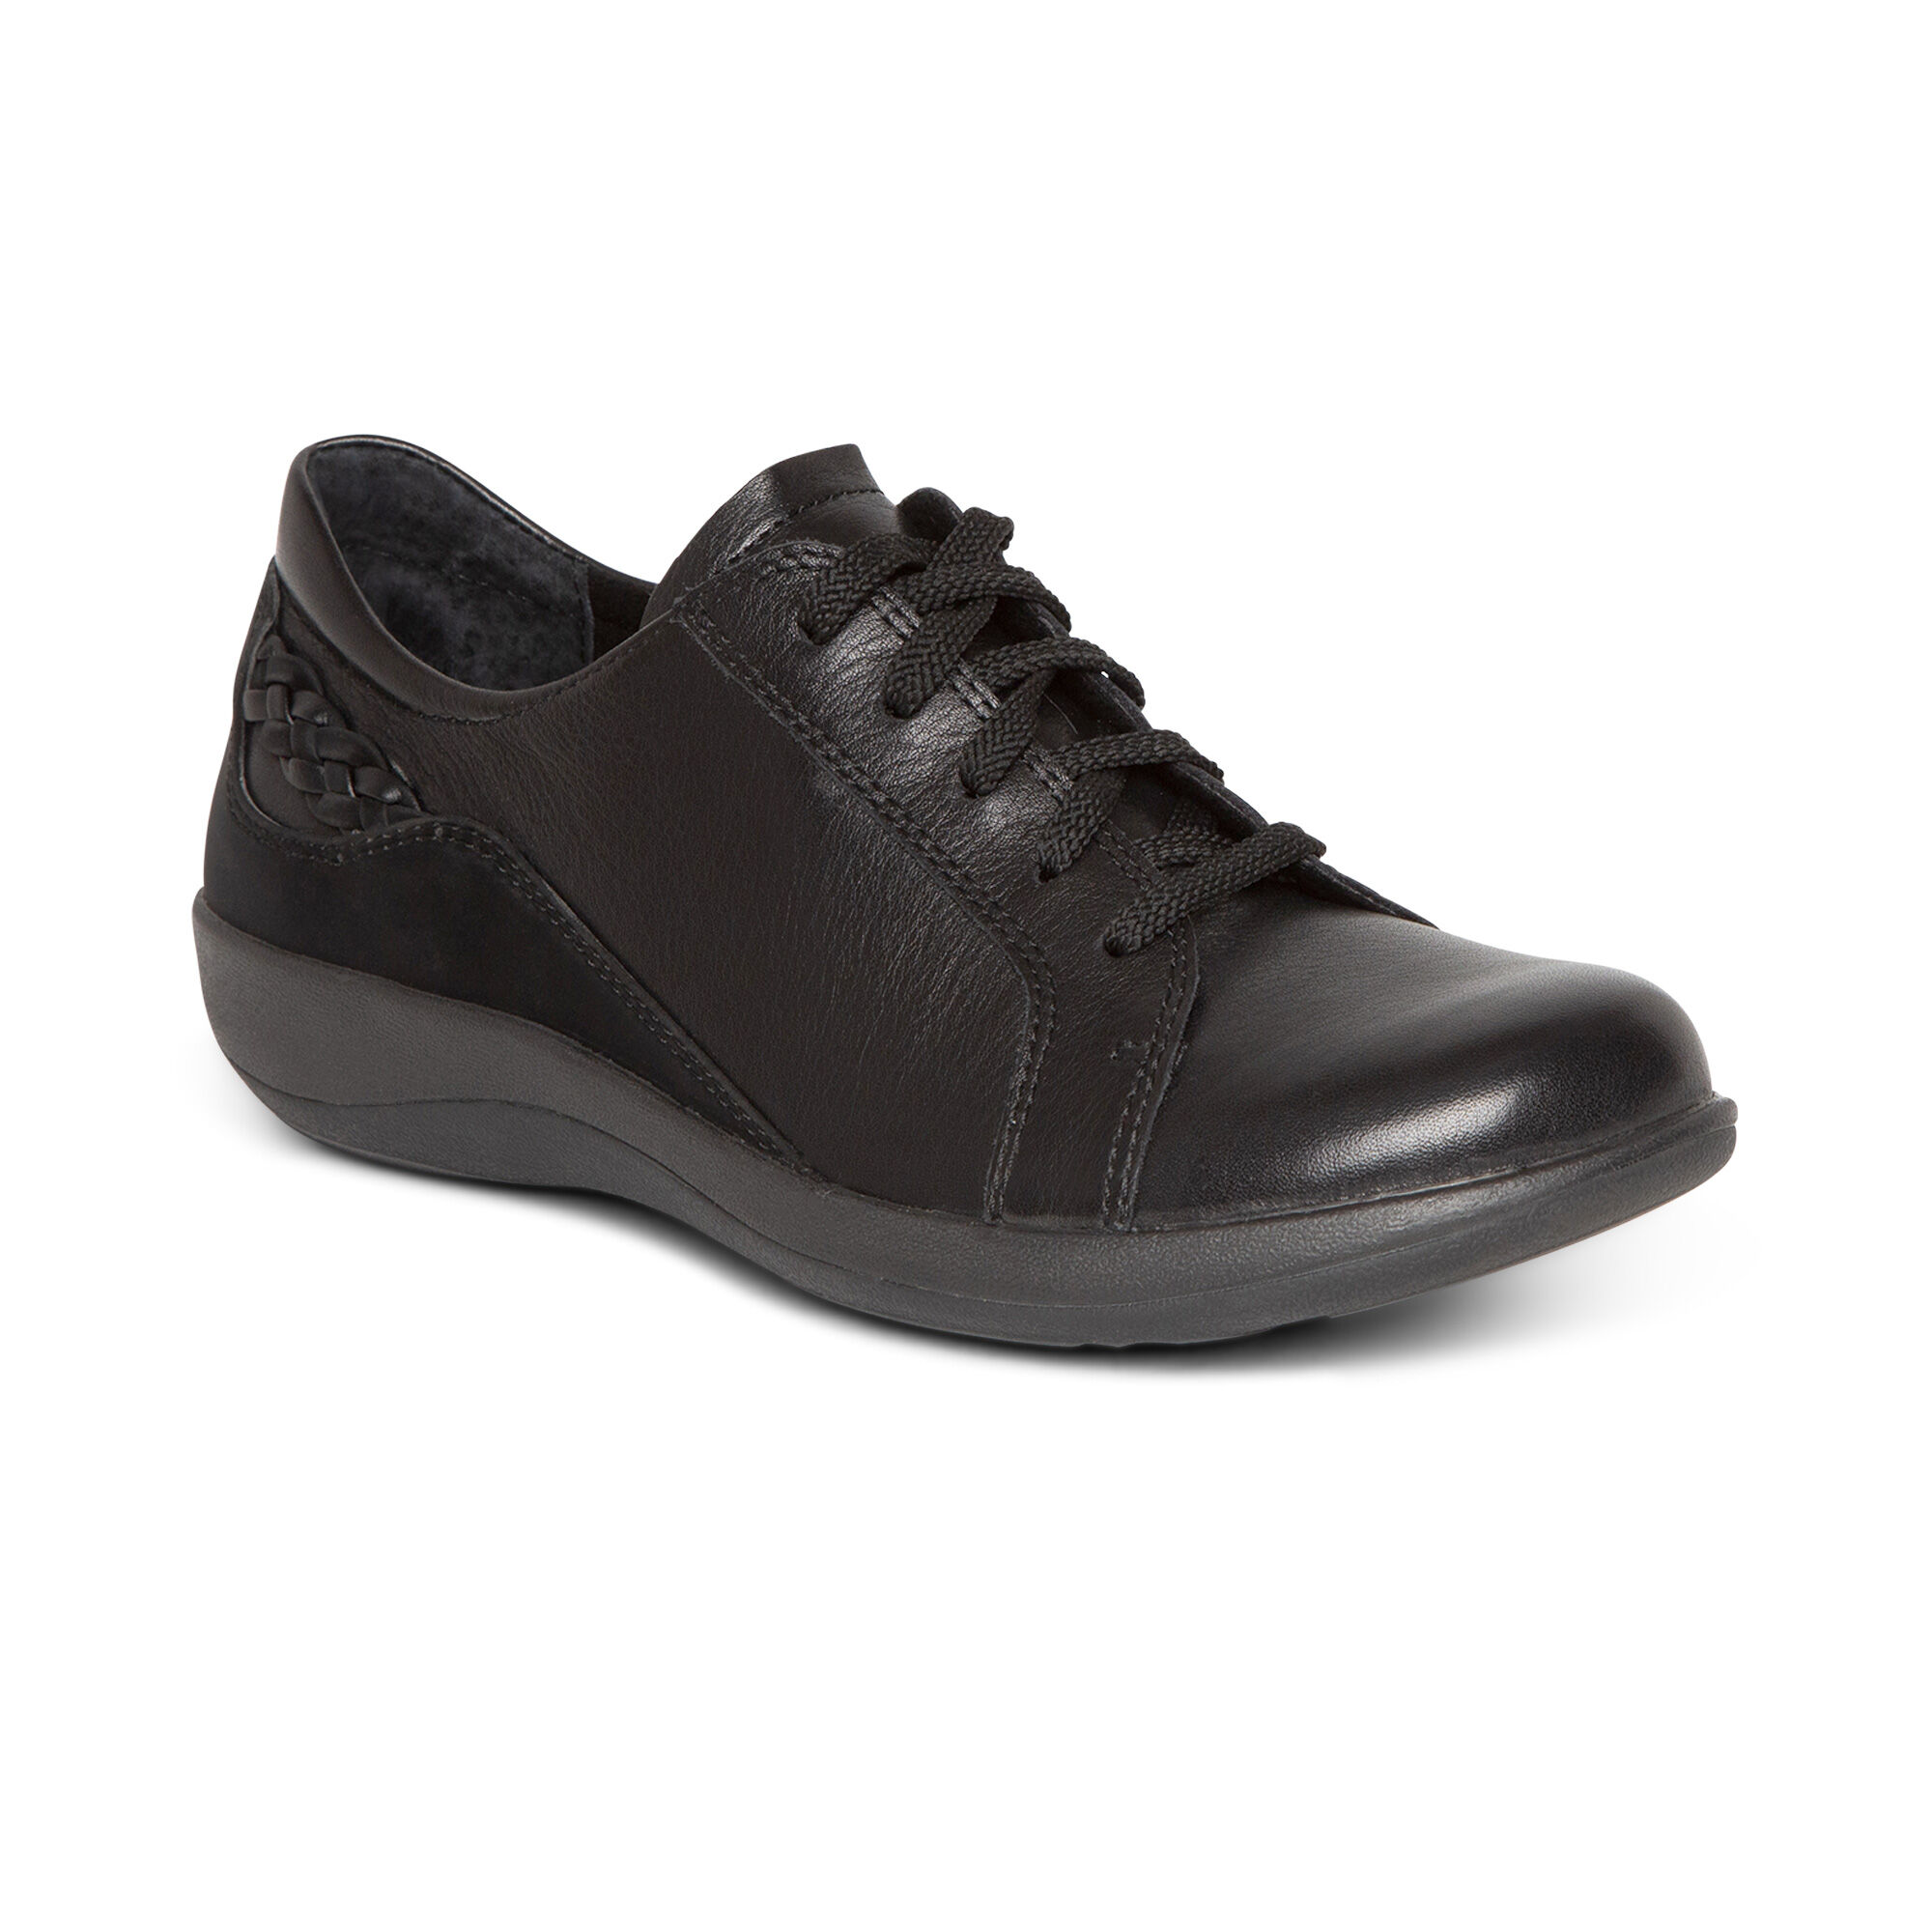 Nike Air 27c 2023 Grey/Black Men'S Sneakers Shoes at Rs 11999/pair |  Chandni Chowk | New Delhi | ID: 2852453482562